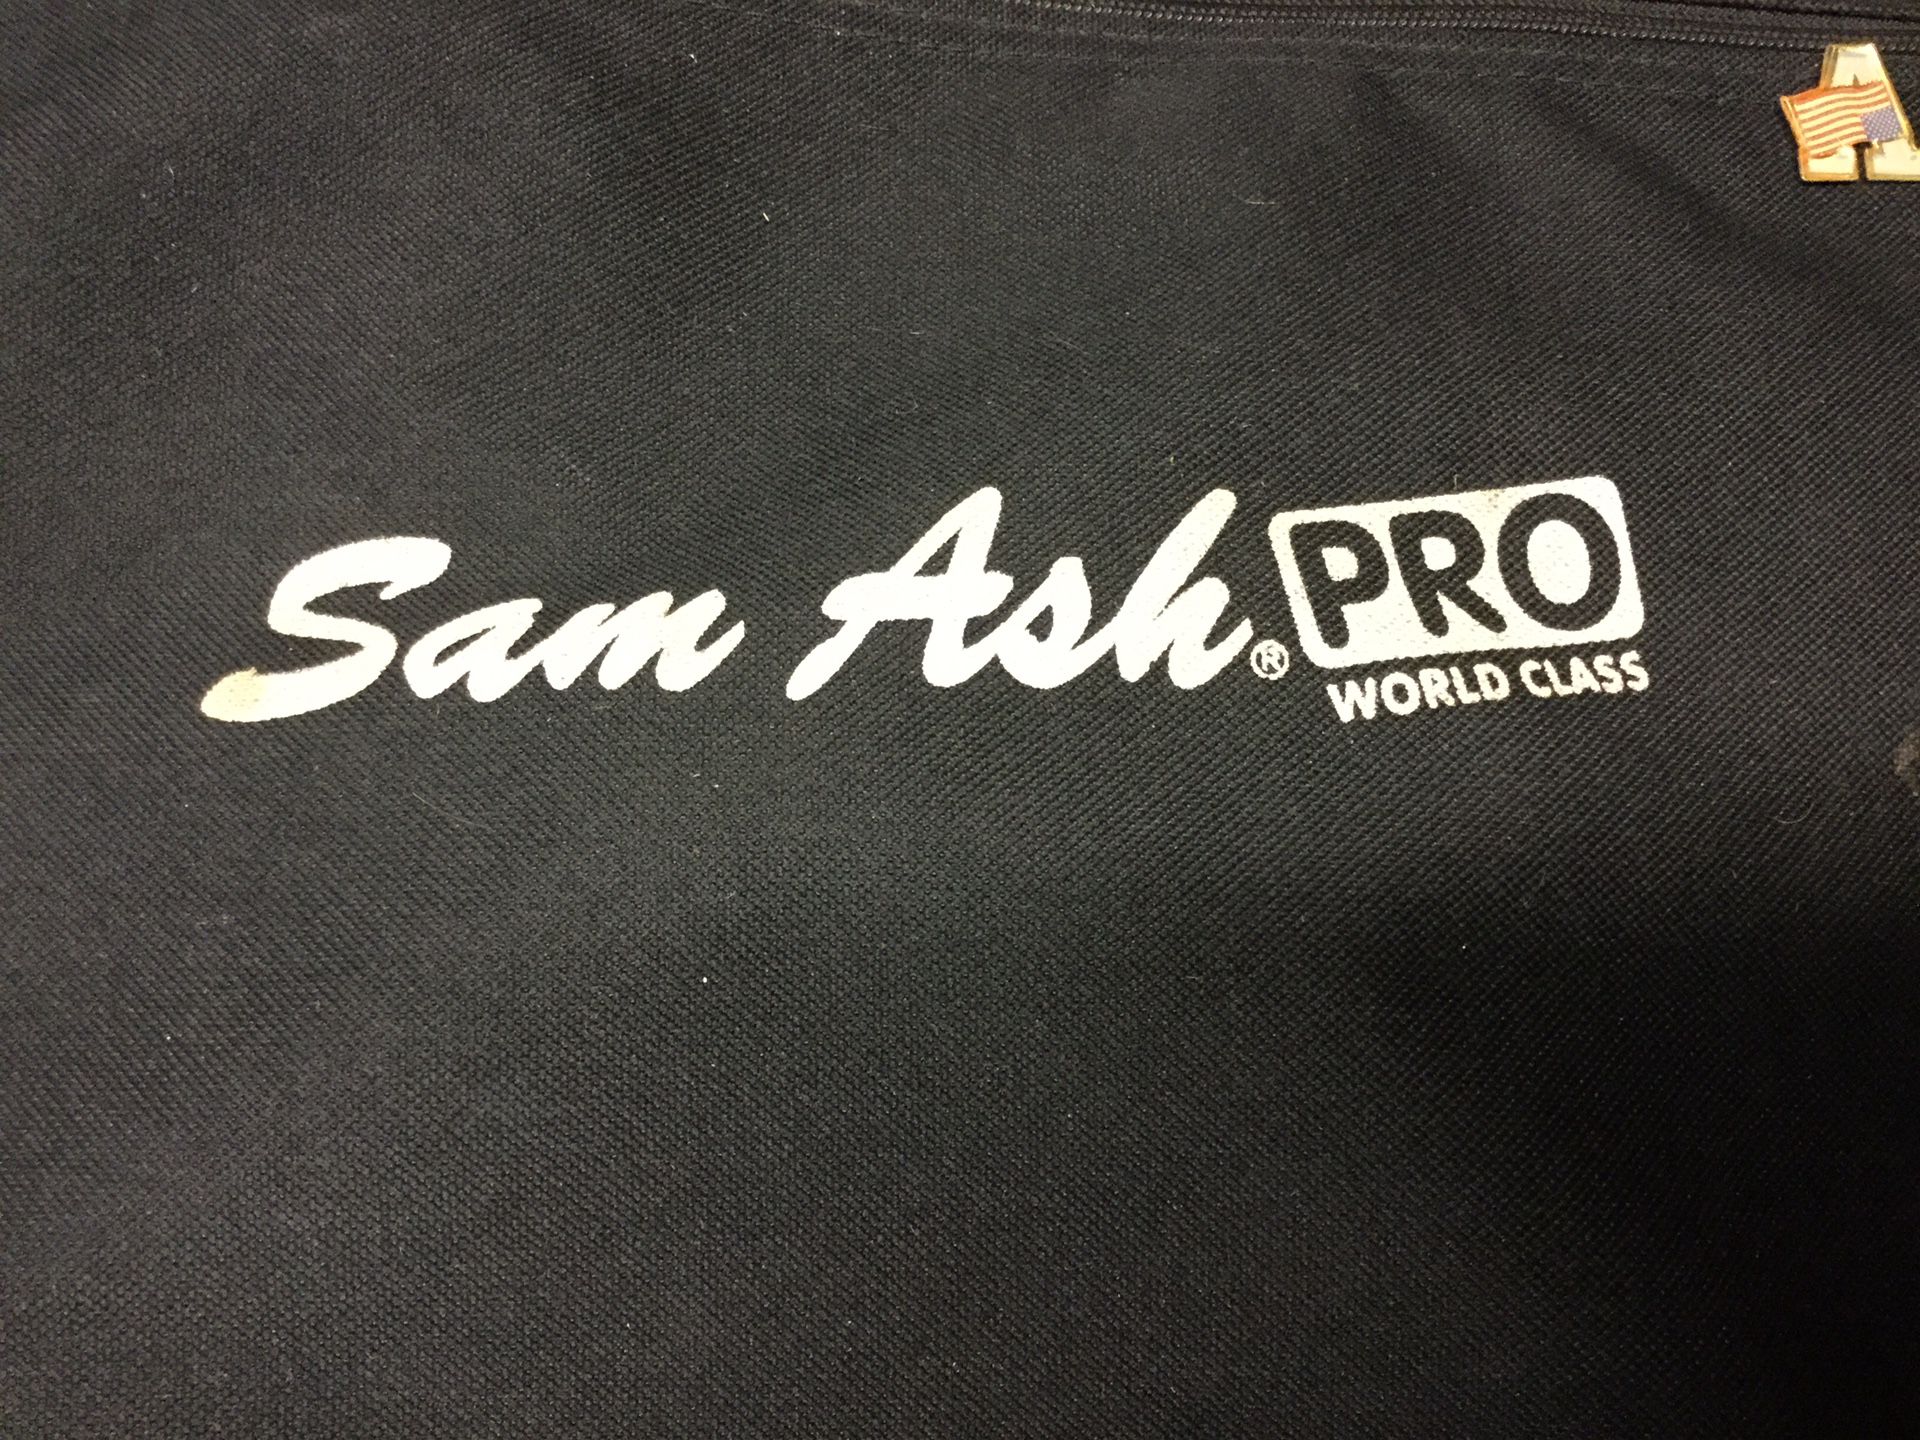 Guitar bag Sam Ash pro world class